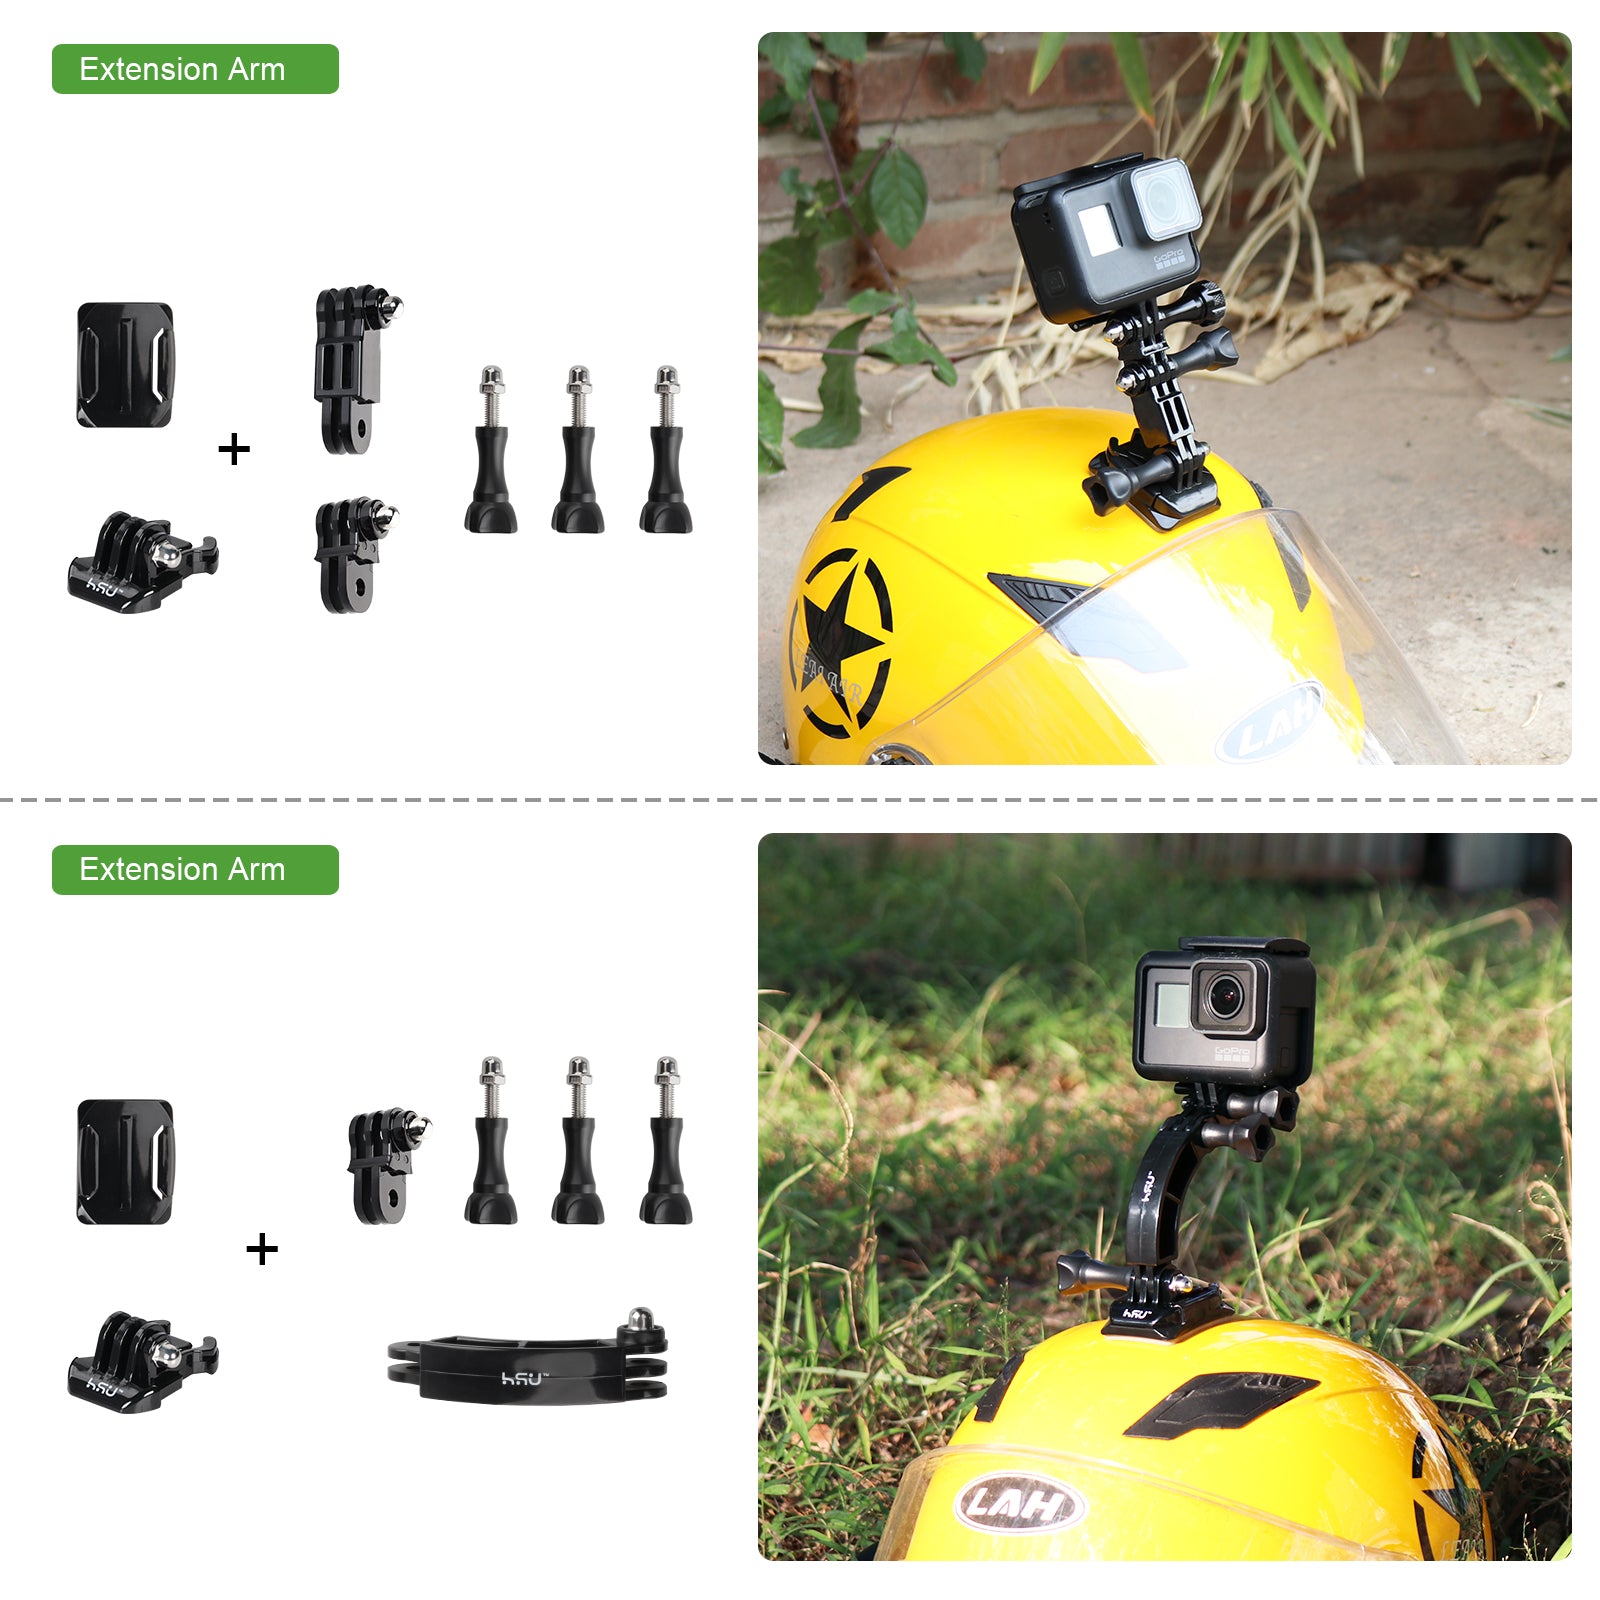 HSU 40-In-1 Accessory Kit for GoPro Hero Series/Dji/AKASO/Action Camera